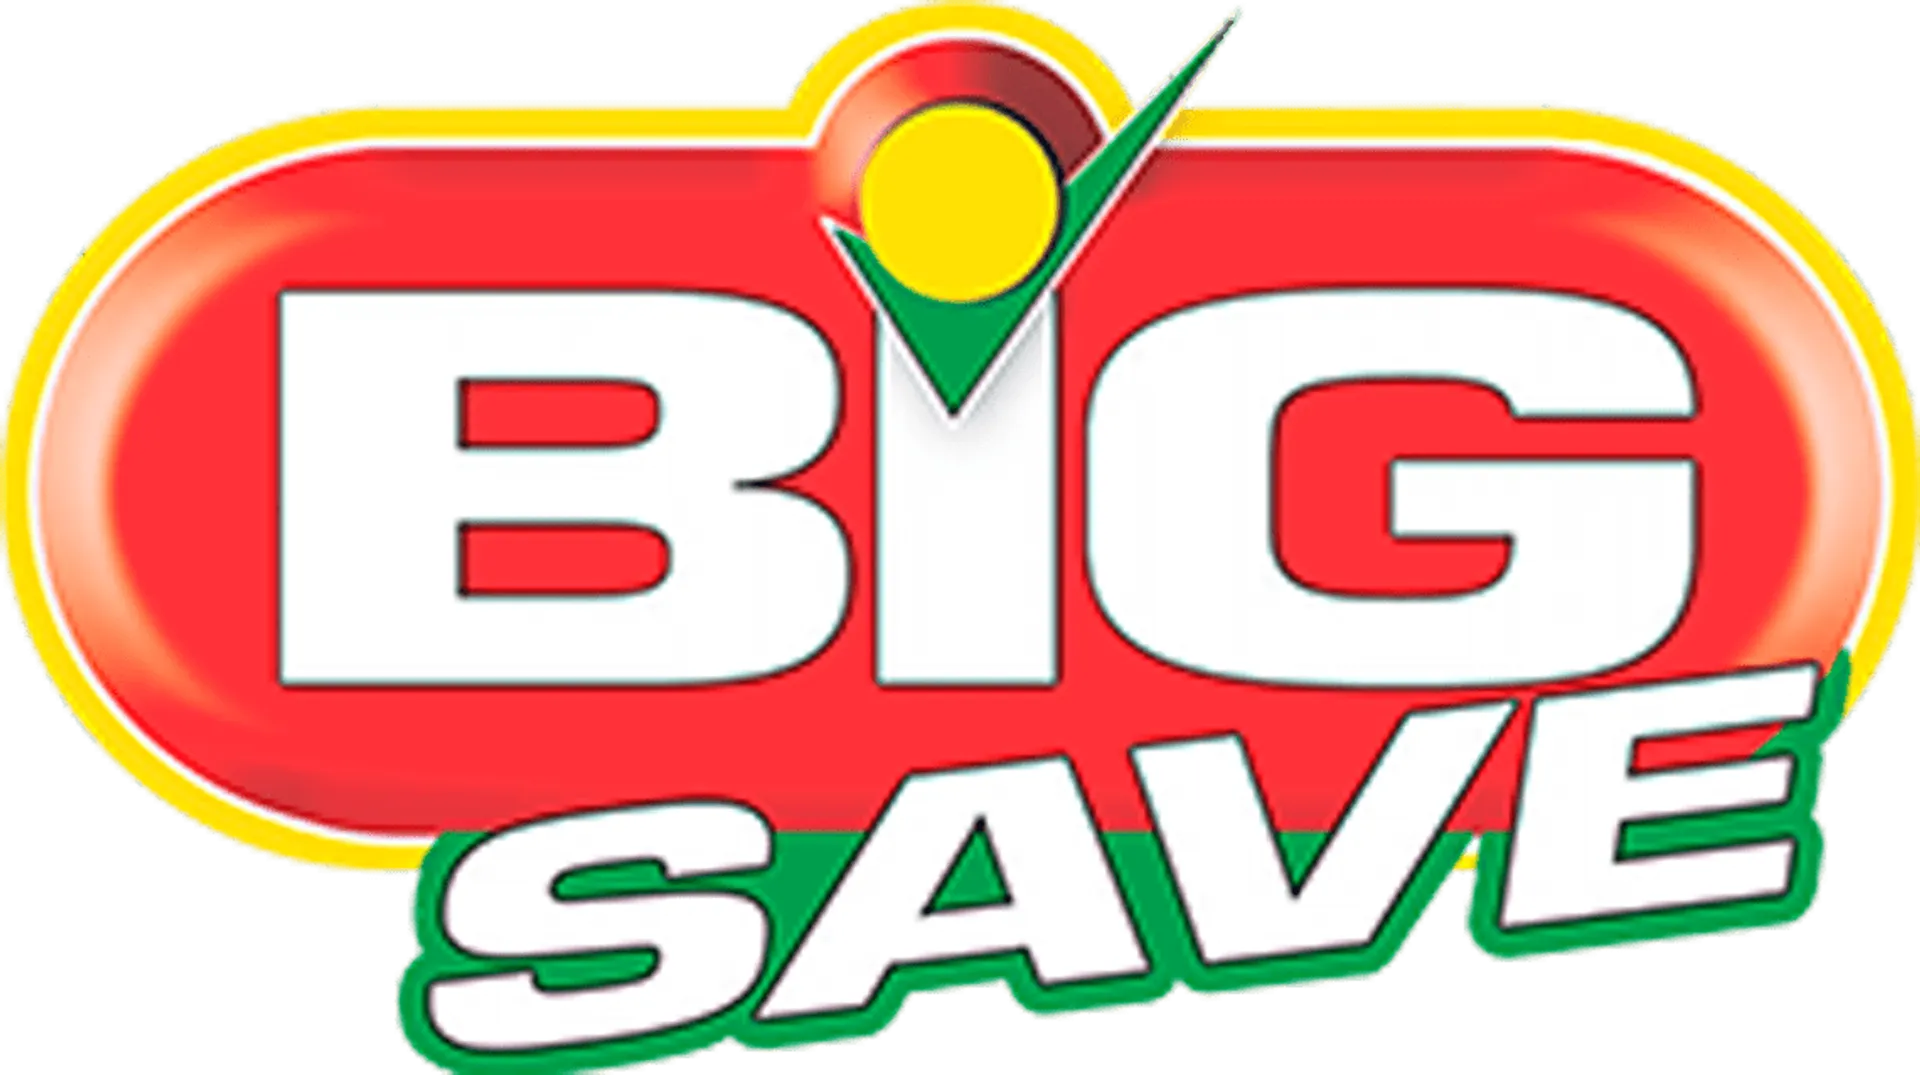 BIG SAVE logo. Current weekly ad